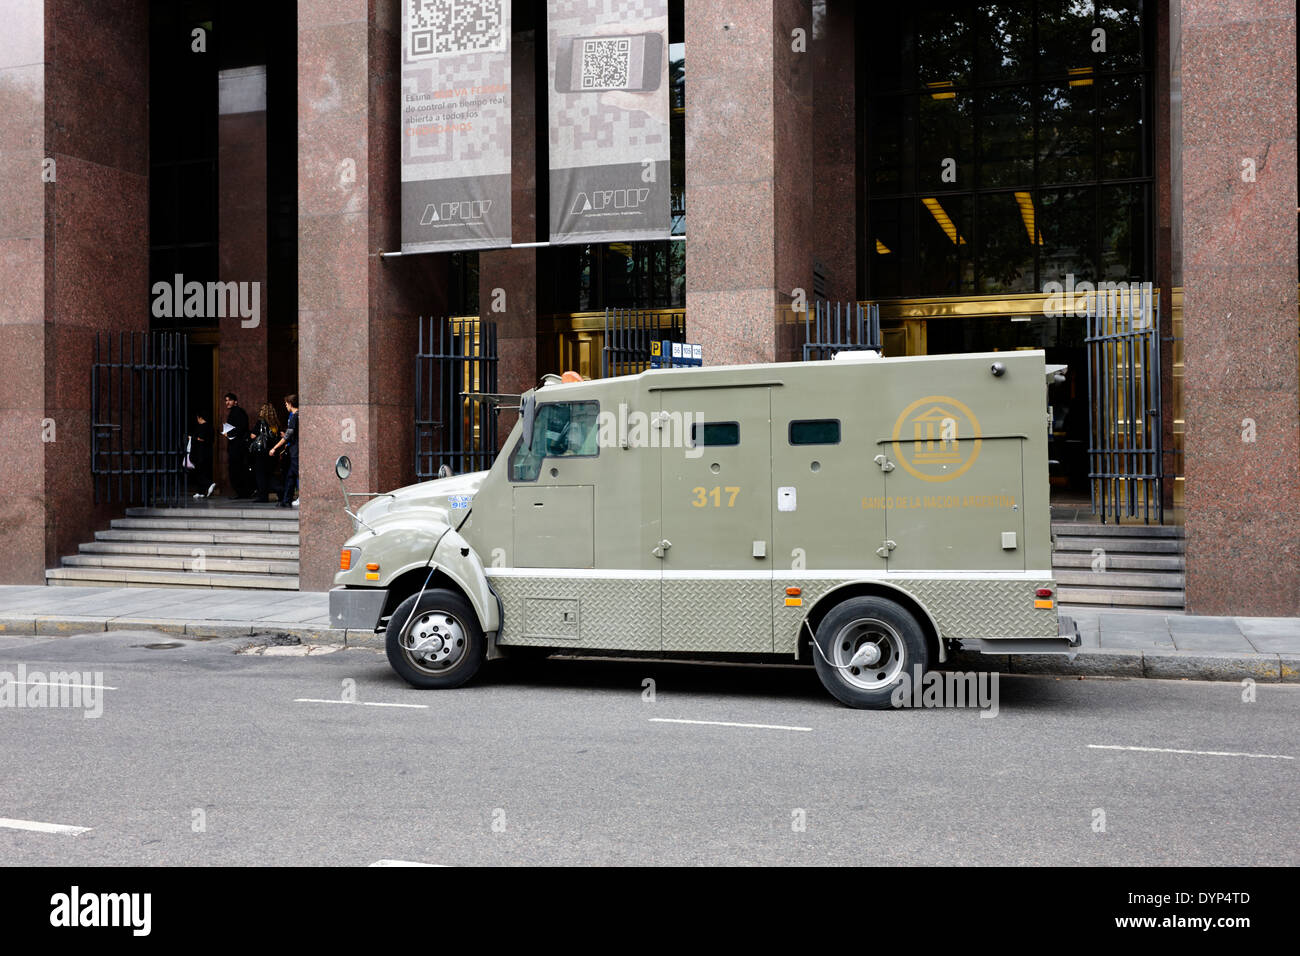 Banco de la nacion chariot hors sécurité administracion afip Federal de Ingresos publicos Buenos Aires Argentine Banque D'Images